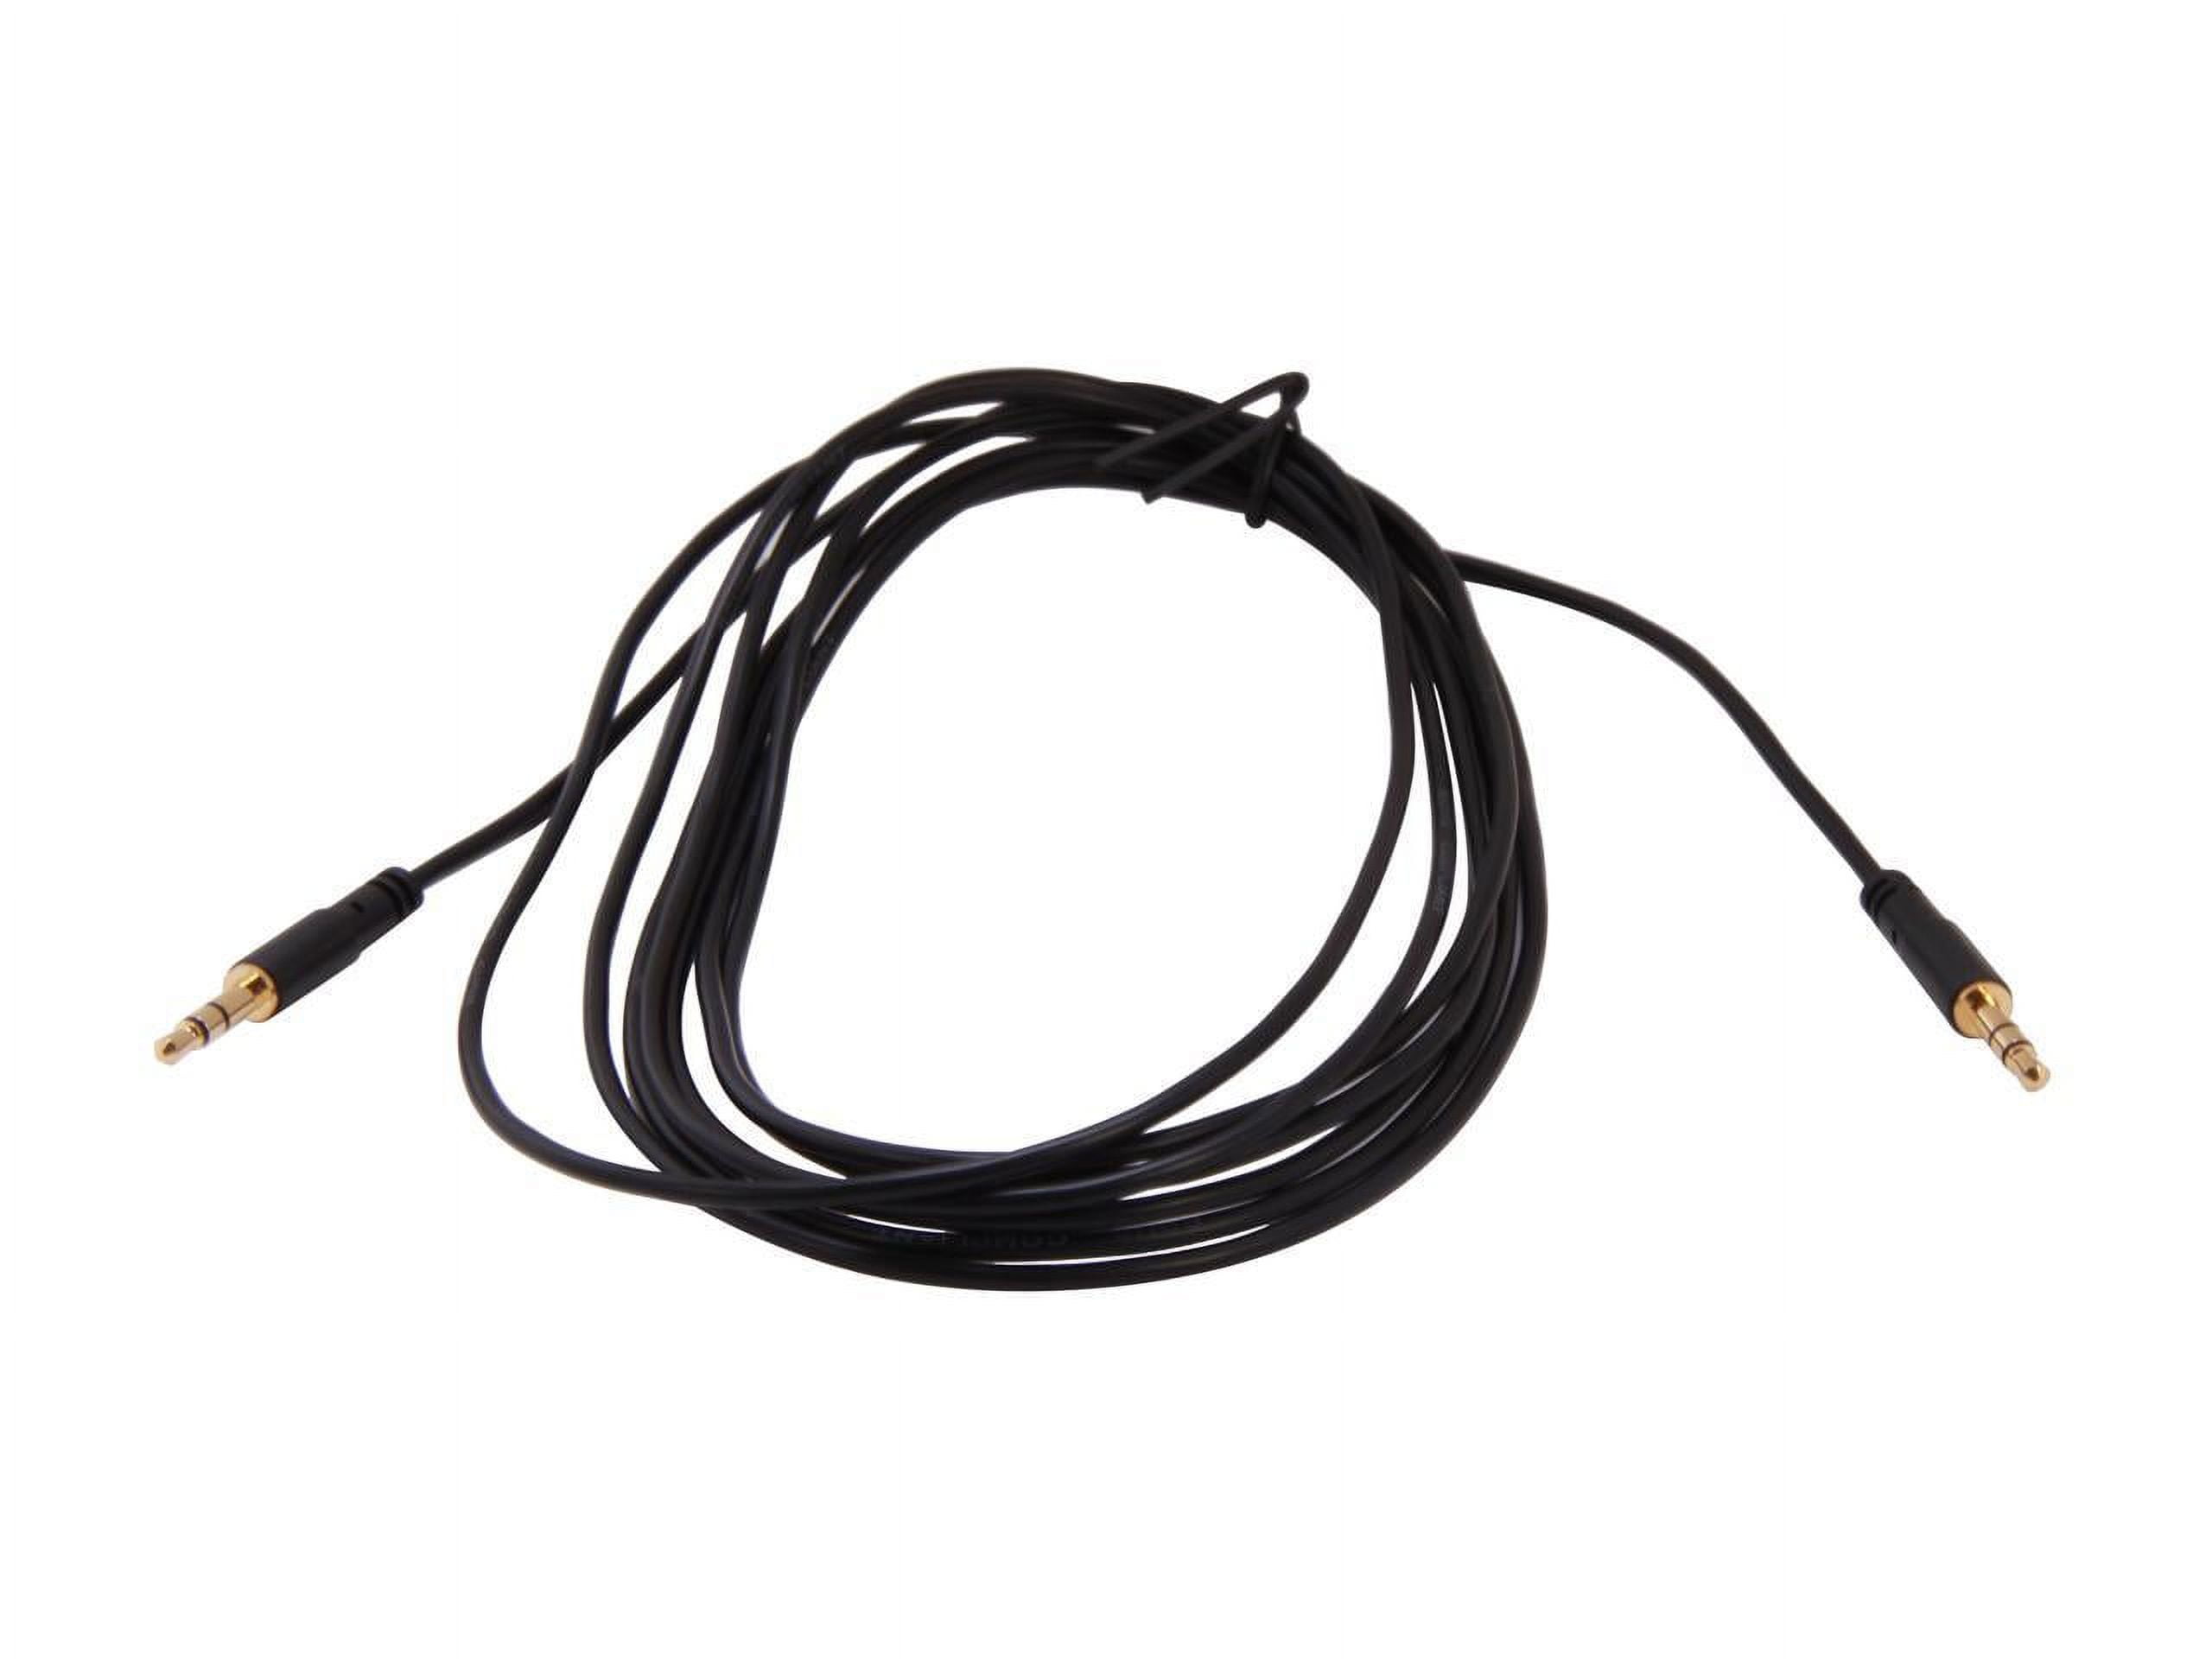  StarTech.com 3.5mm Audio Cable - 3 ft - Slim - M / M - AUX Cable  - Male to Male Audio Cable - AUX Cord - Headphone Cable - Auxiliary Cable  (MU3MMS), Black : Electronics